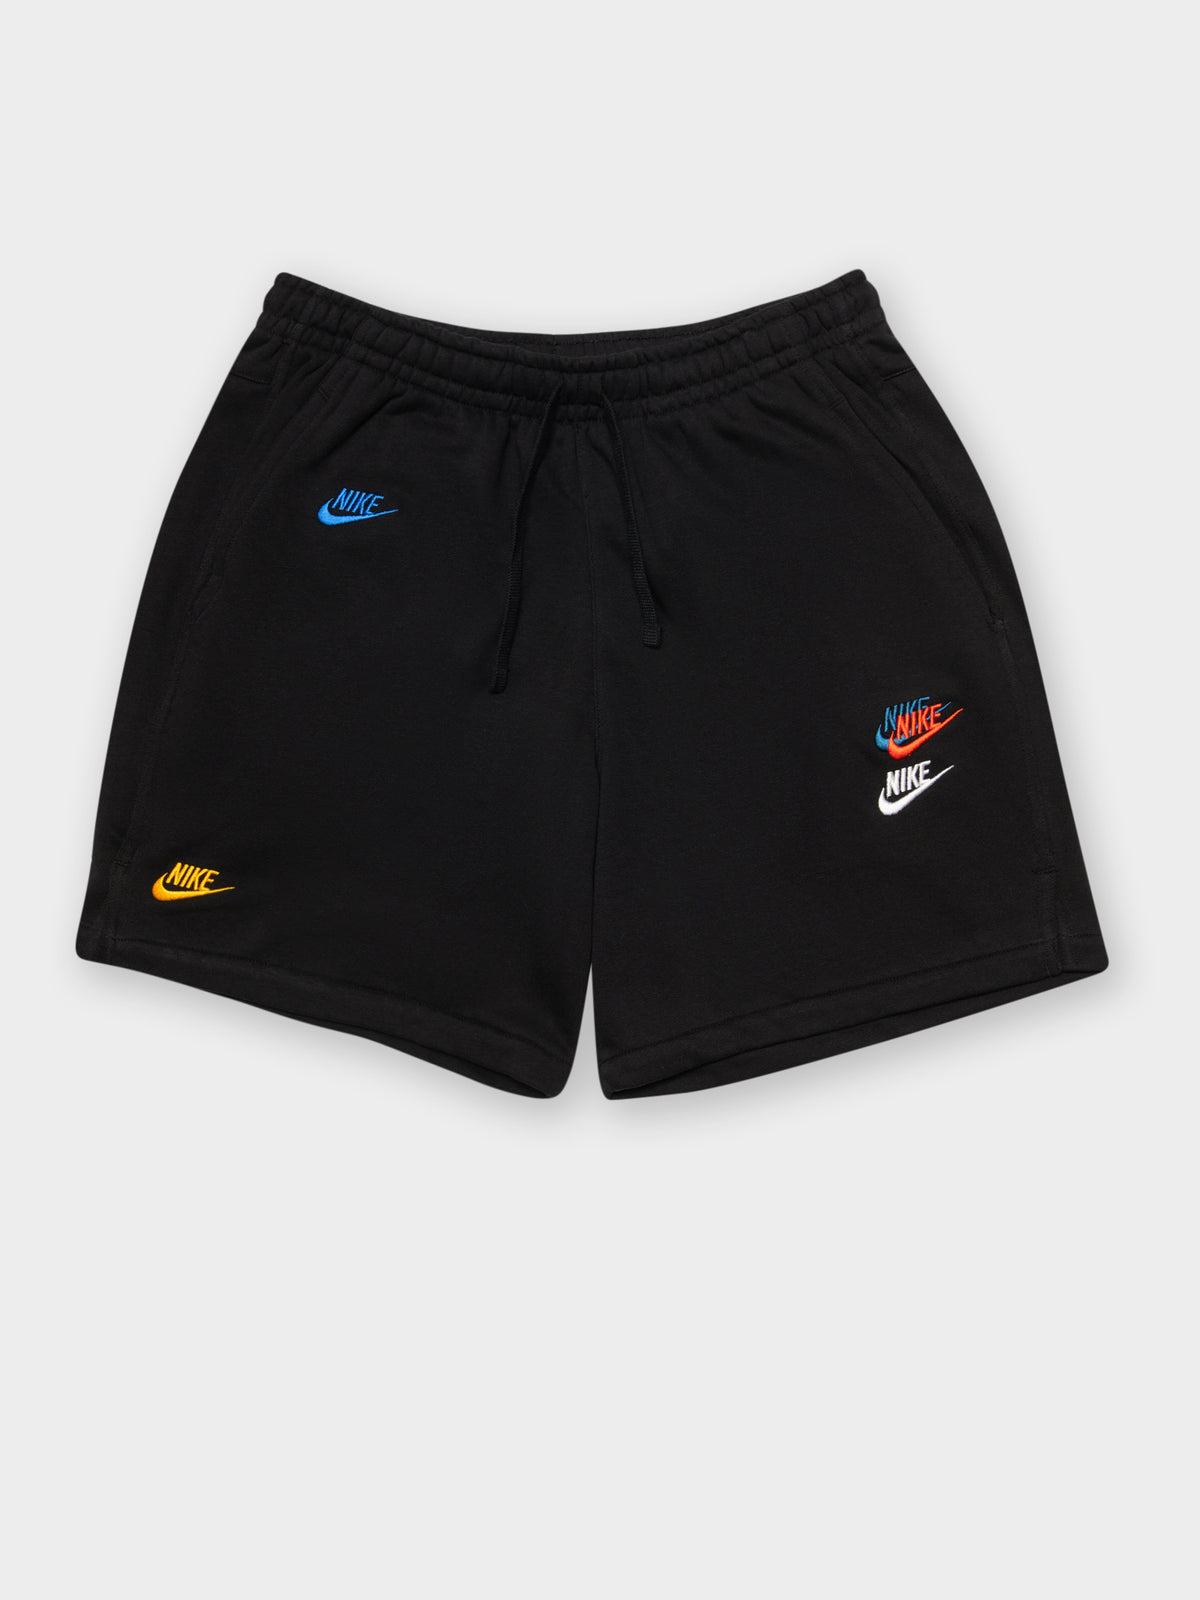 NSW Essentials+ Tech Shorts in Black